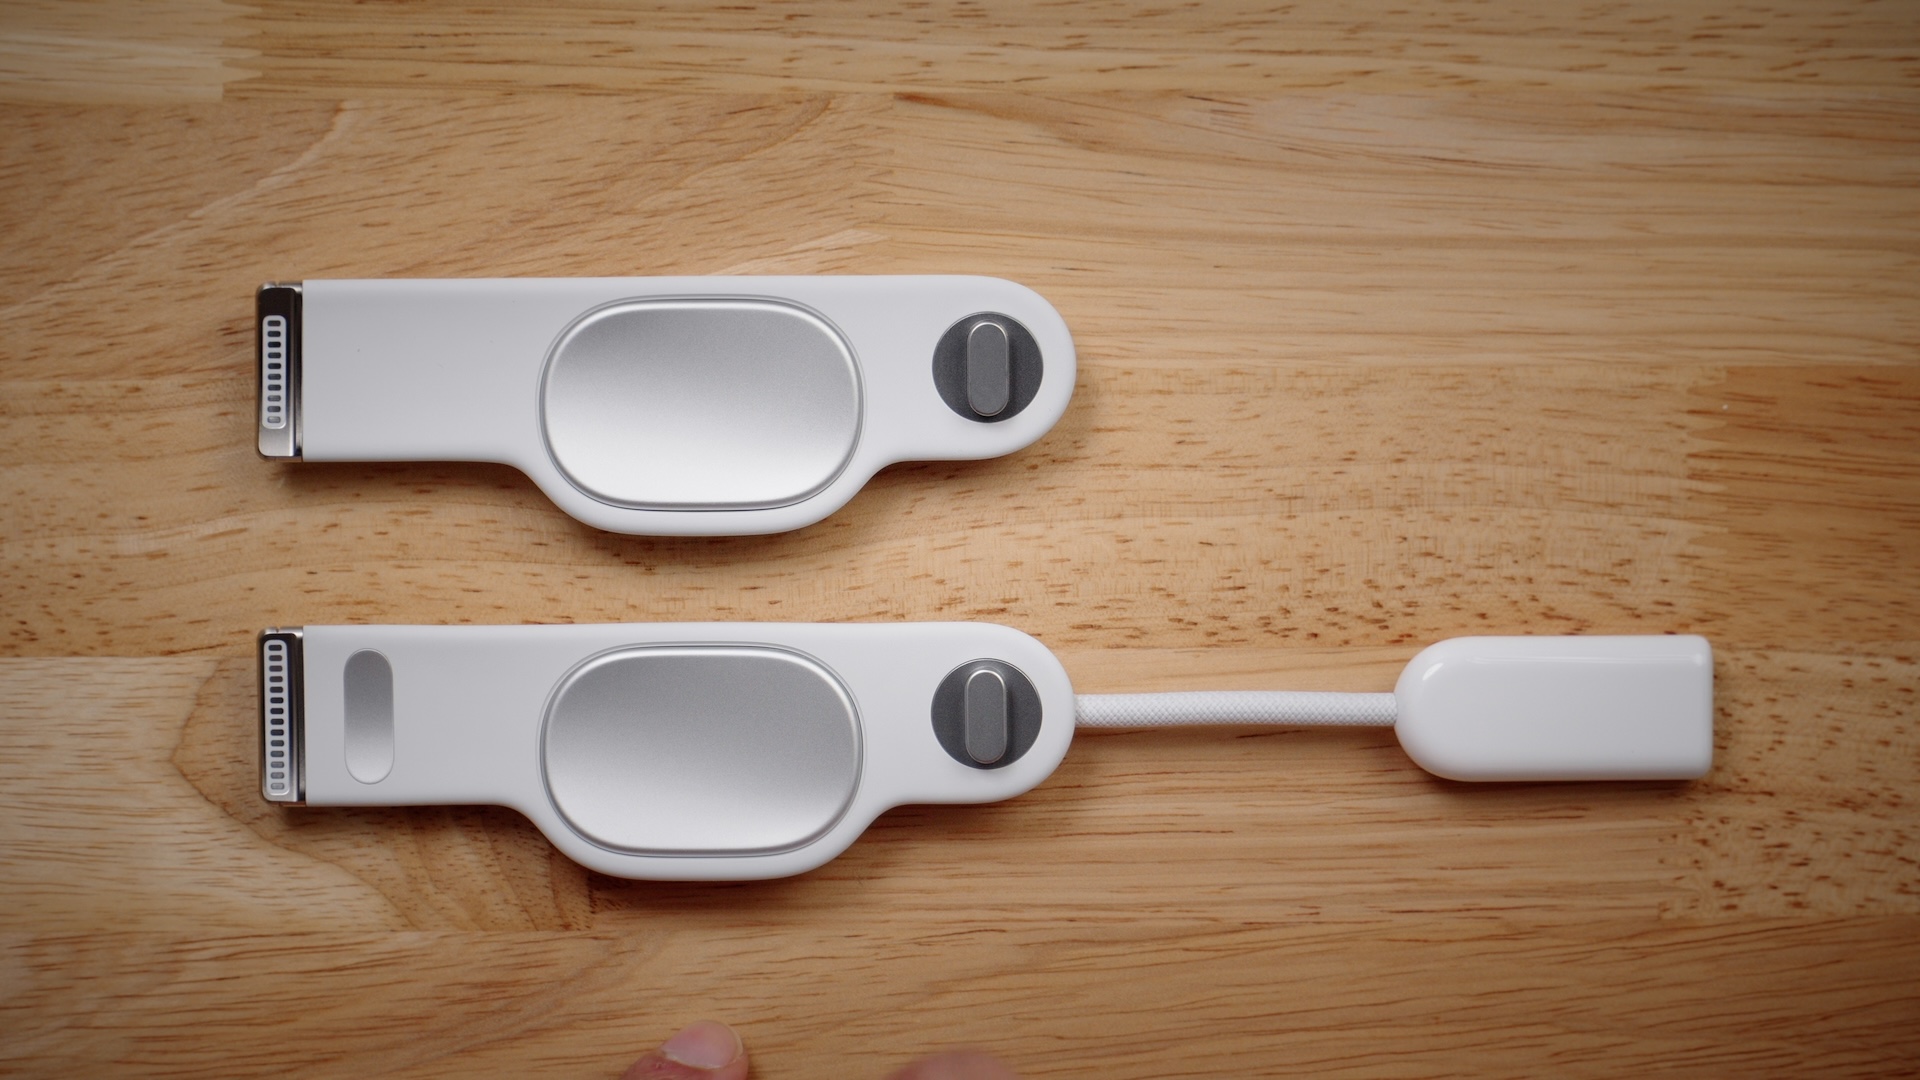 Ремень разработчика Apple Vision Pro по сравнению с ремешком Audio Strap на столе